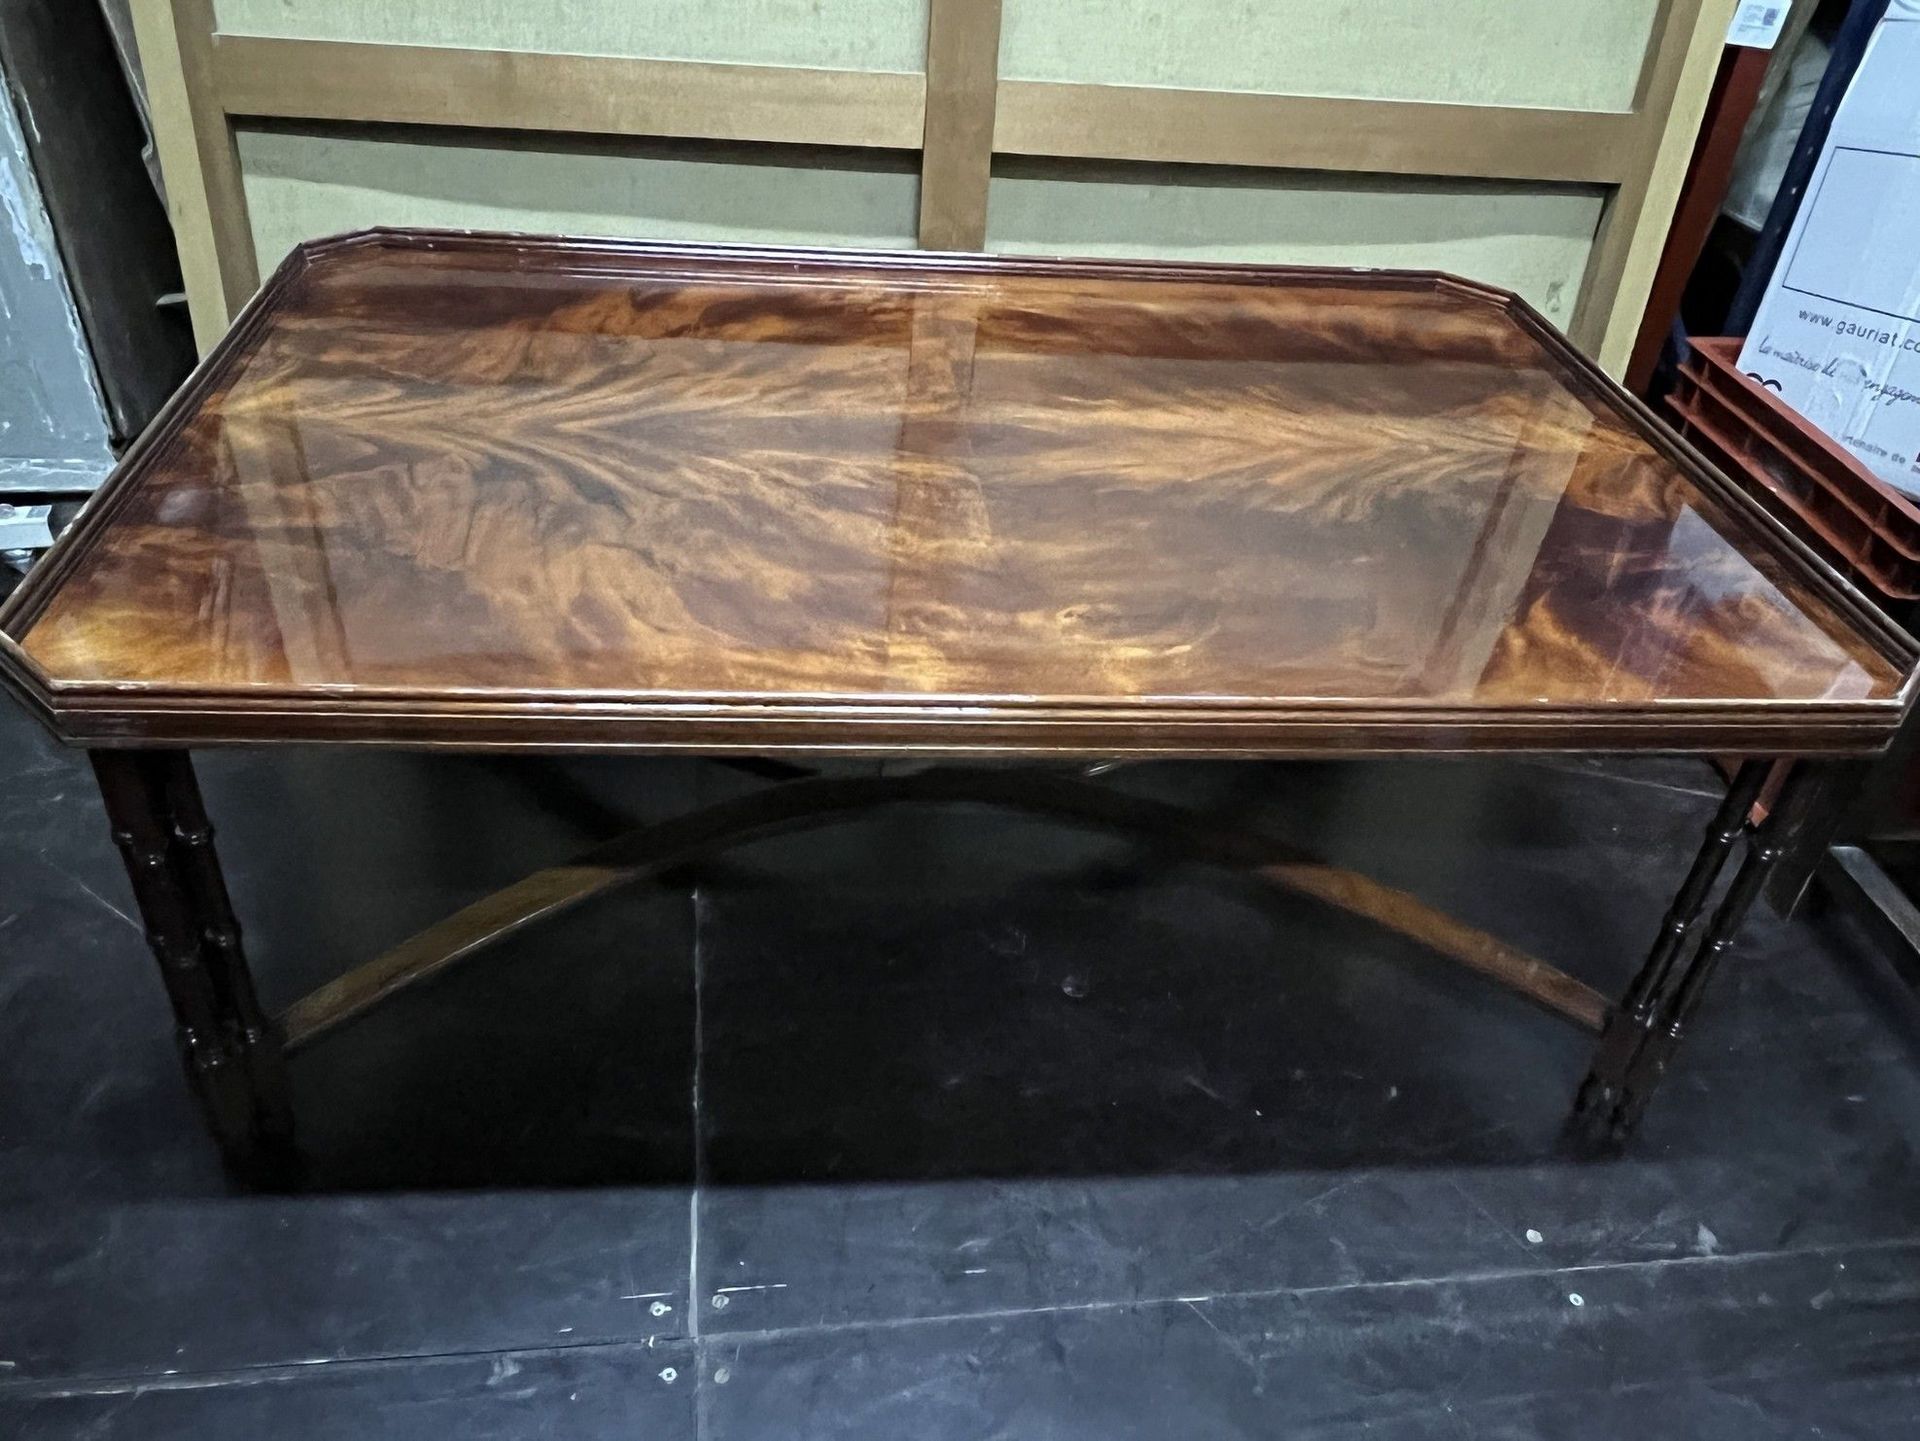 Null 木制咖啡桌，有方形部分，玻璃桌面，用于展示。

无目录销售。以最优惠的价格出售 - 无保留价格。